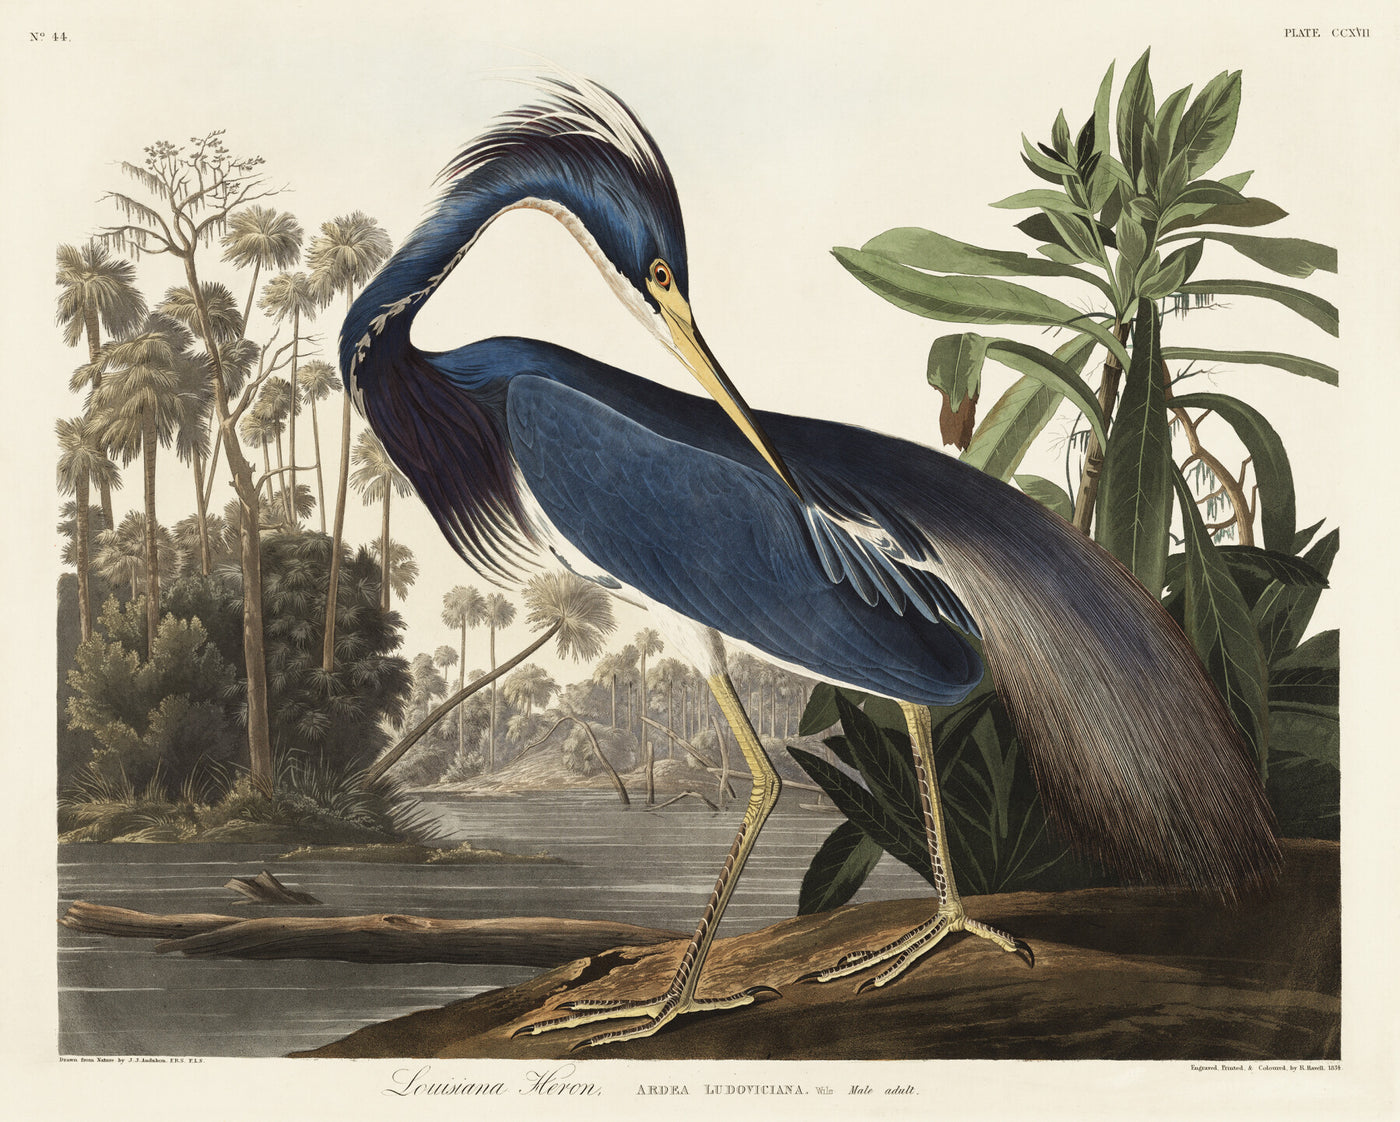 Louisiana reiger - John James Audubon